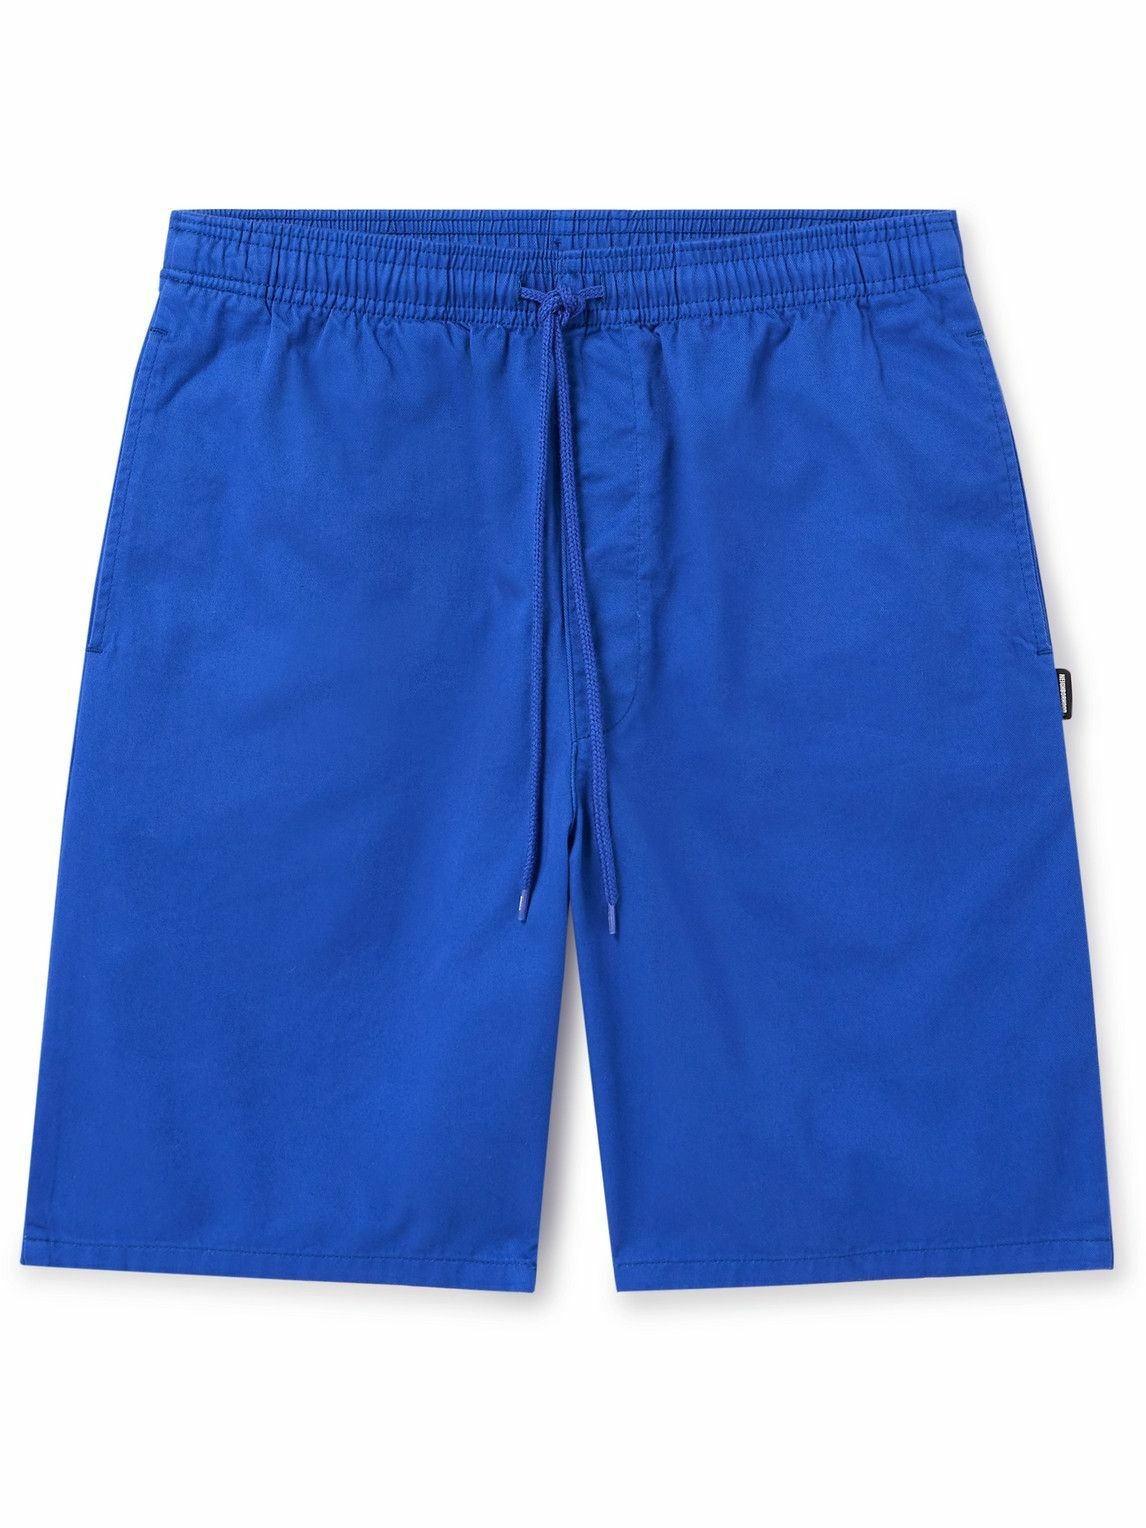 Neighborhood - Denim Cargo Shorts - Blue Neighborhood